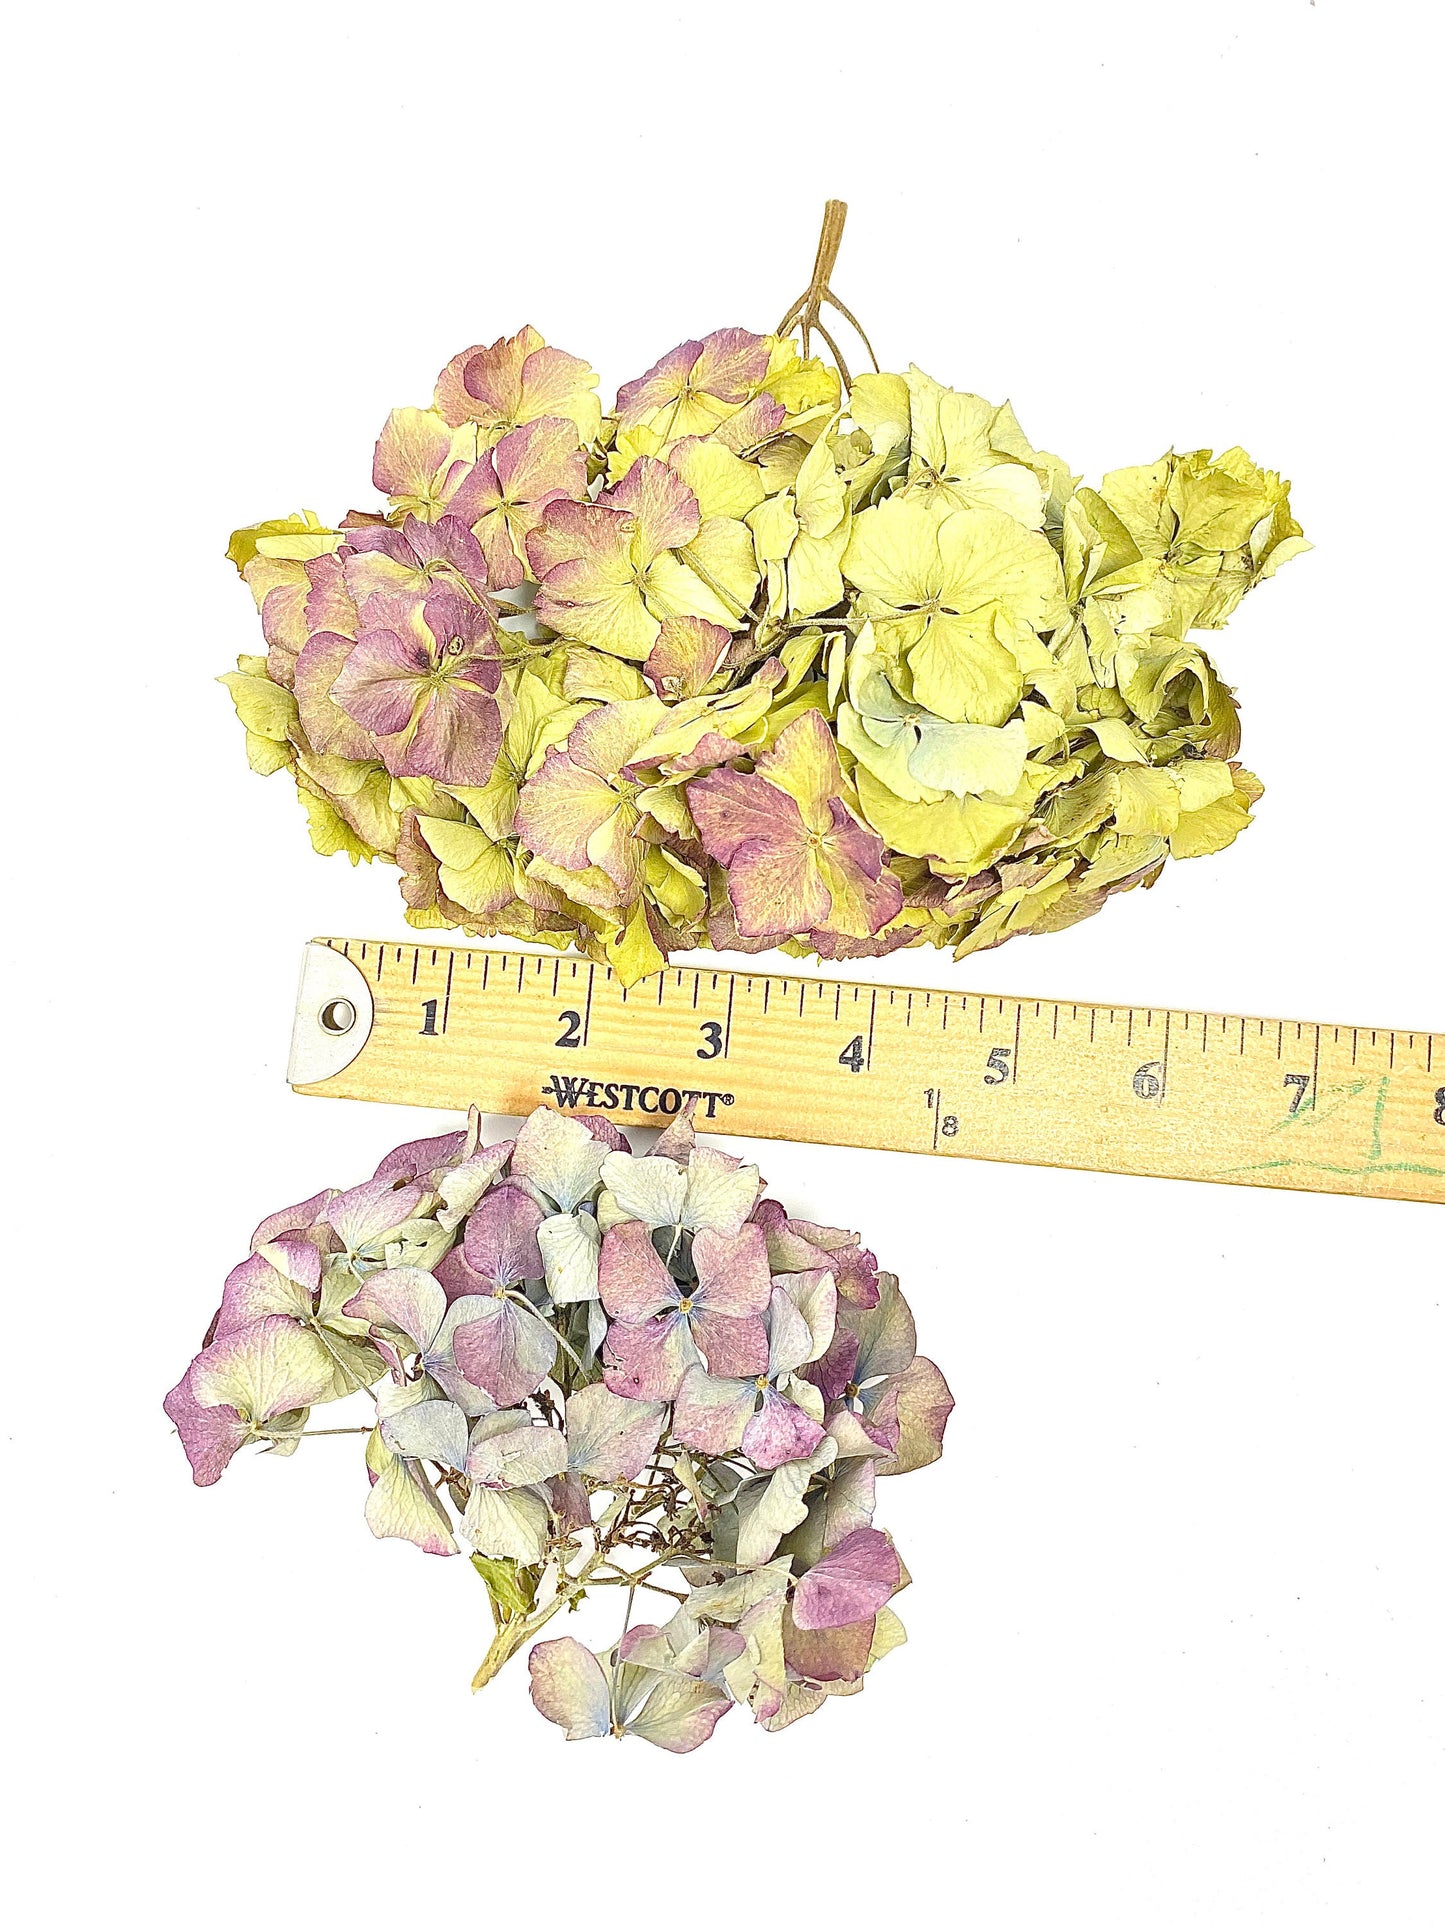 Dried Hydrangea Flat Heads, Stemless hydrangea, Dry Flowers, Blue, Green, Purple, Natural, Wedding, Bouquet, Bridal, DIY, Photo Promps, Mix